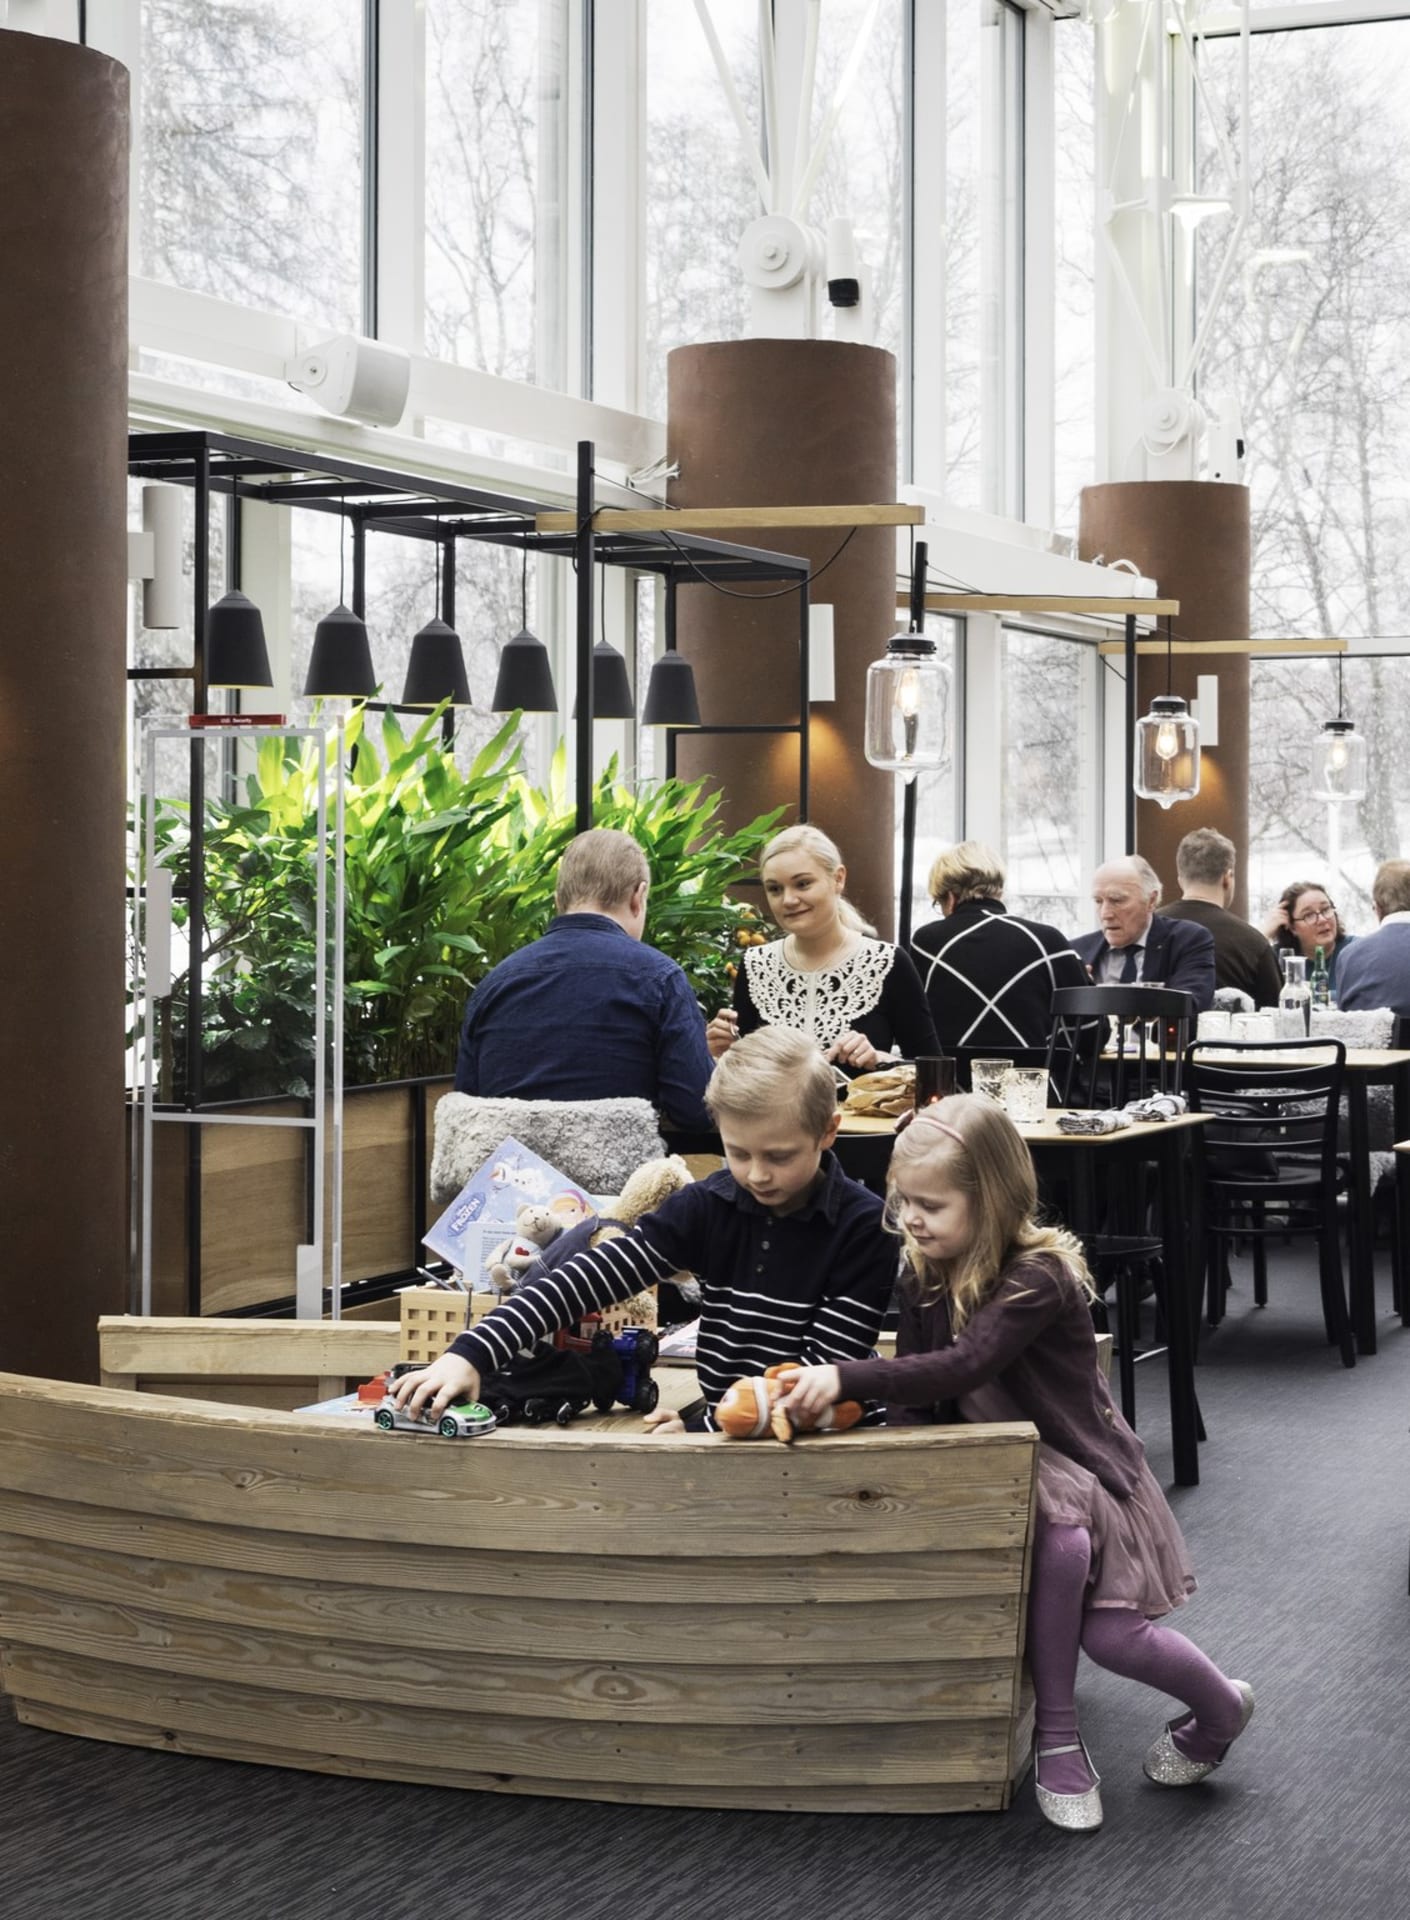 Children enjoying their stay in Restaurant Tuhto, Tampere Hall.